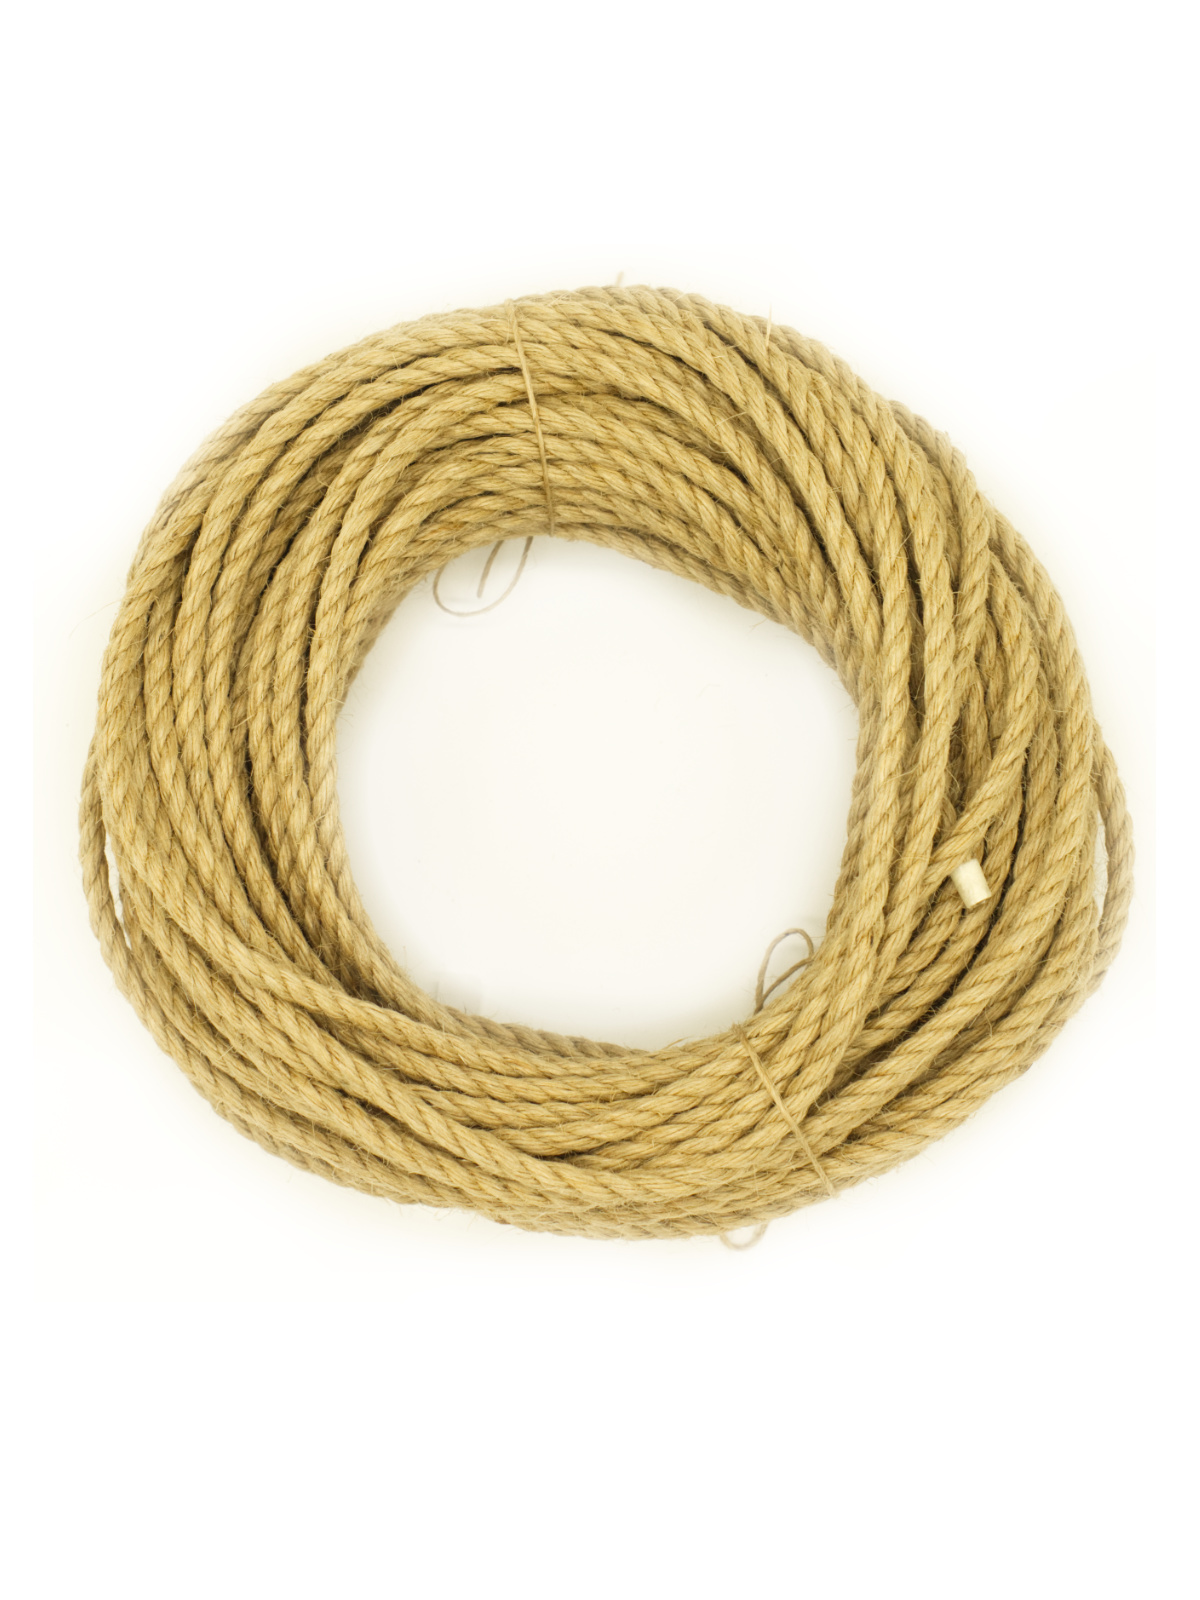 ∅ 5.5mm raw jute rope, AMATSUNAWA 30, JBO-free, for DIY processing